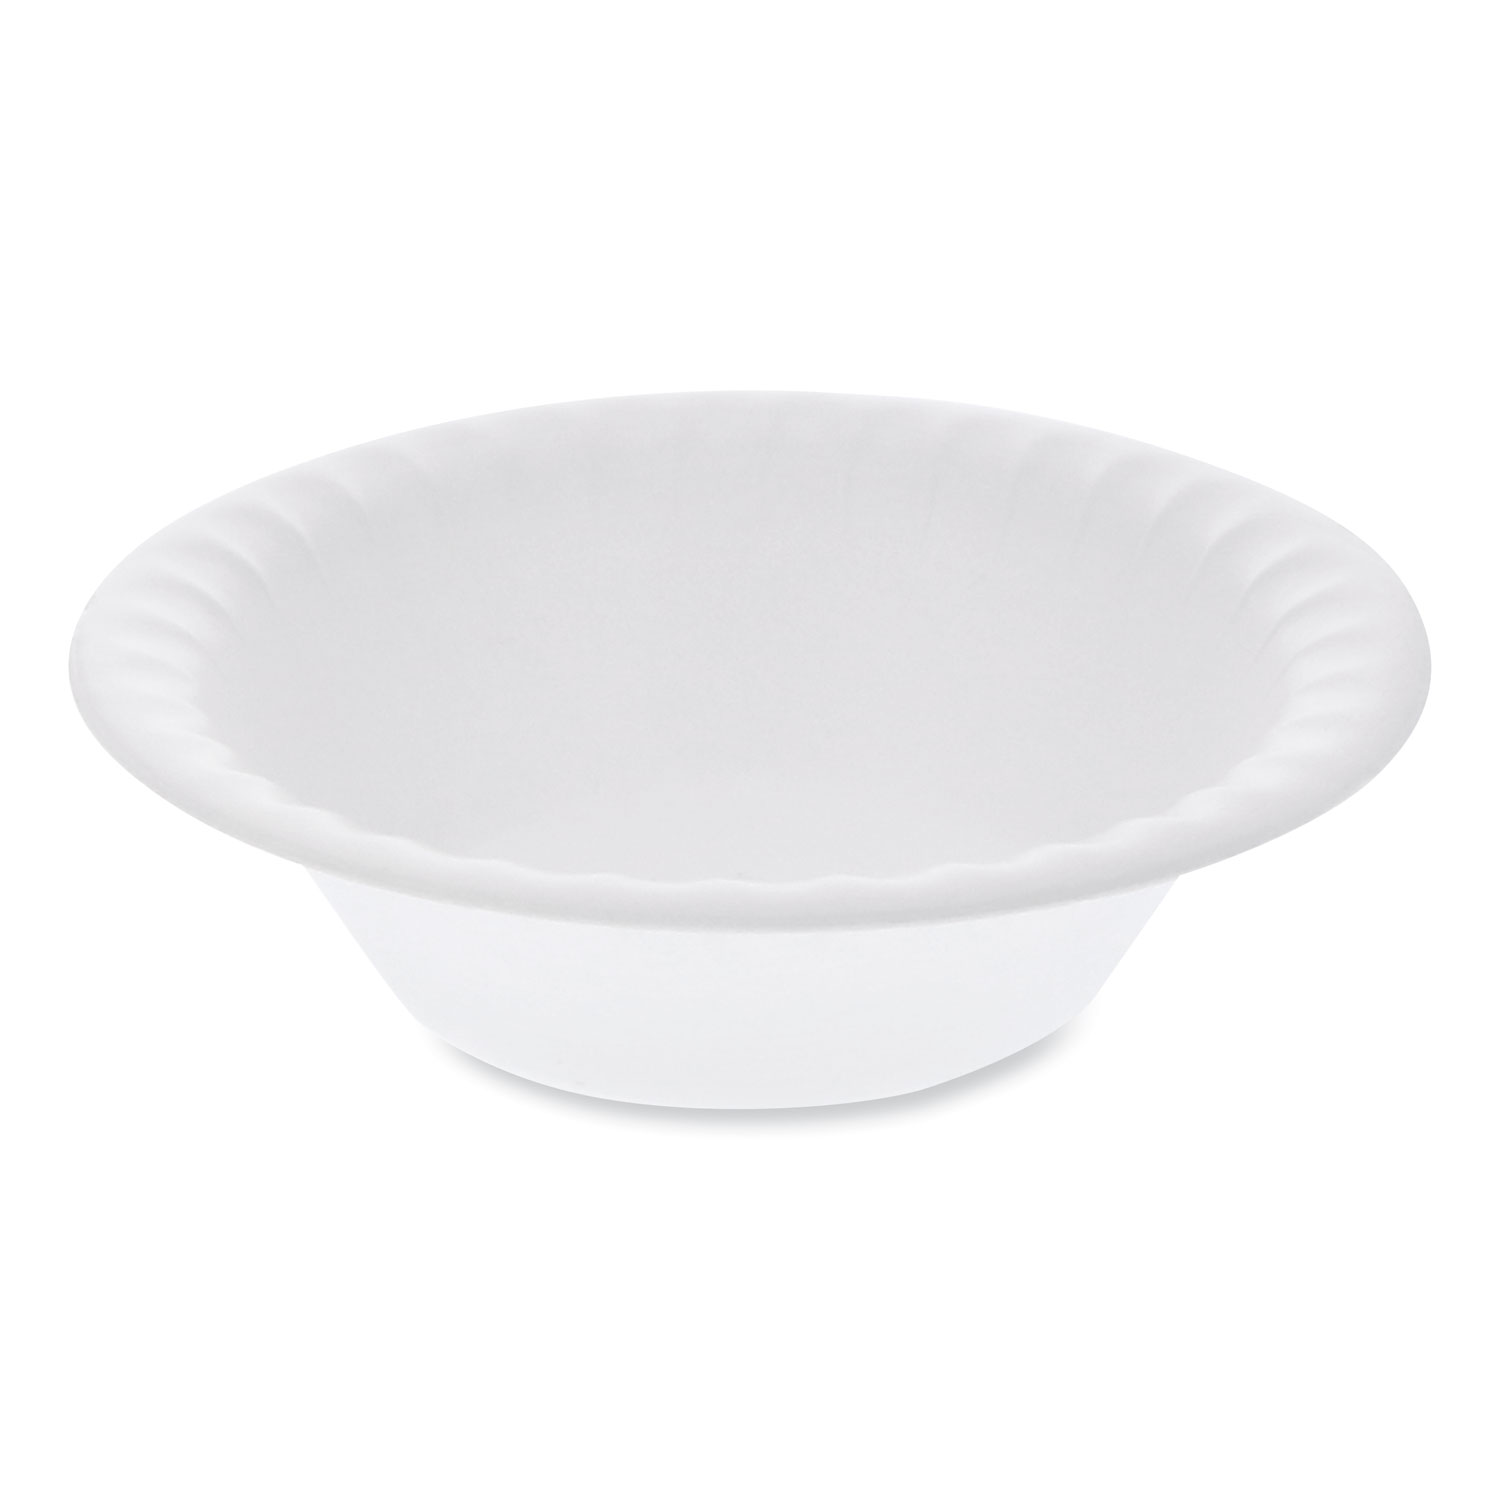 Pactiv Unlaminated Foam Dinnerware, Bowl, 6 Diameter, 12 oz, White, 1,000/Carton